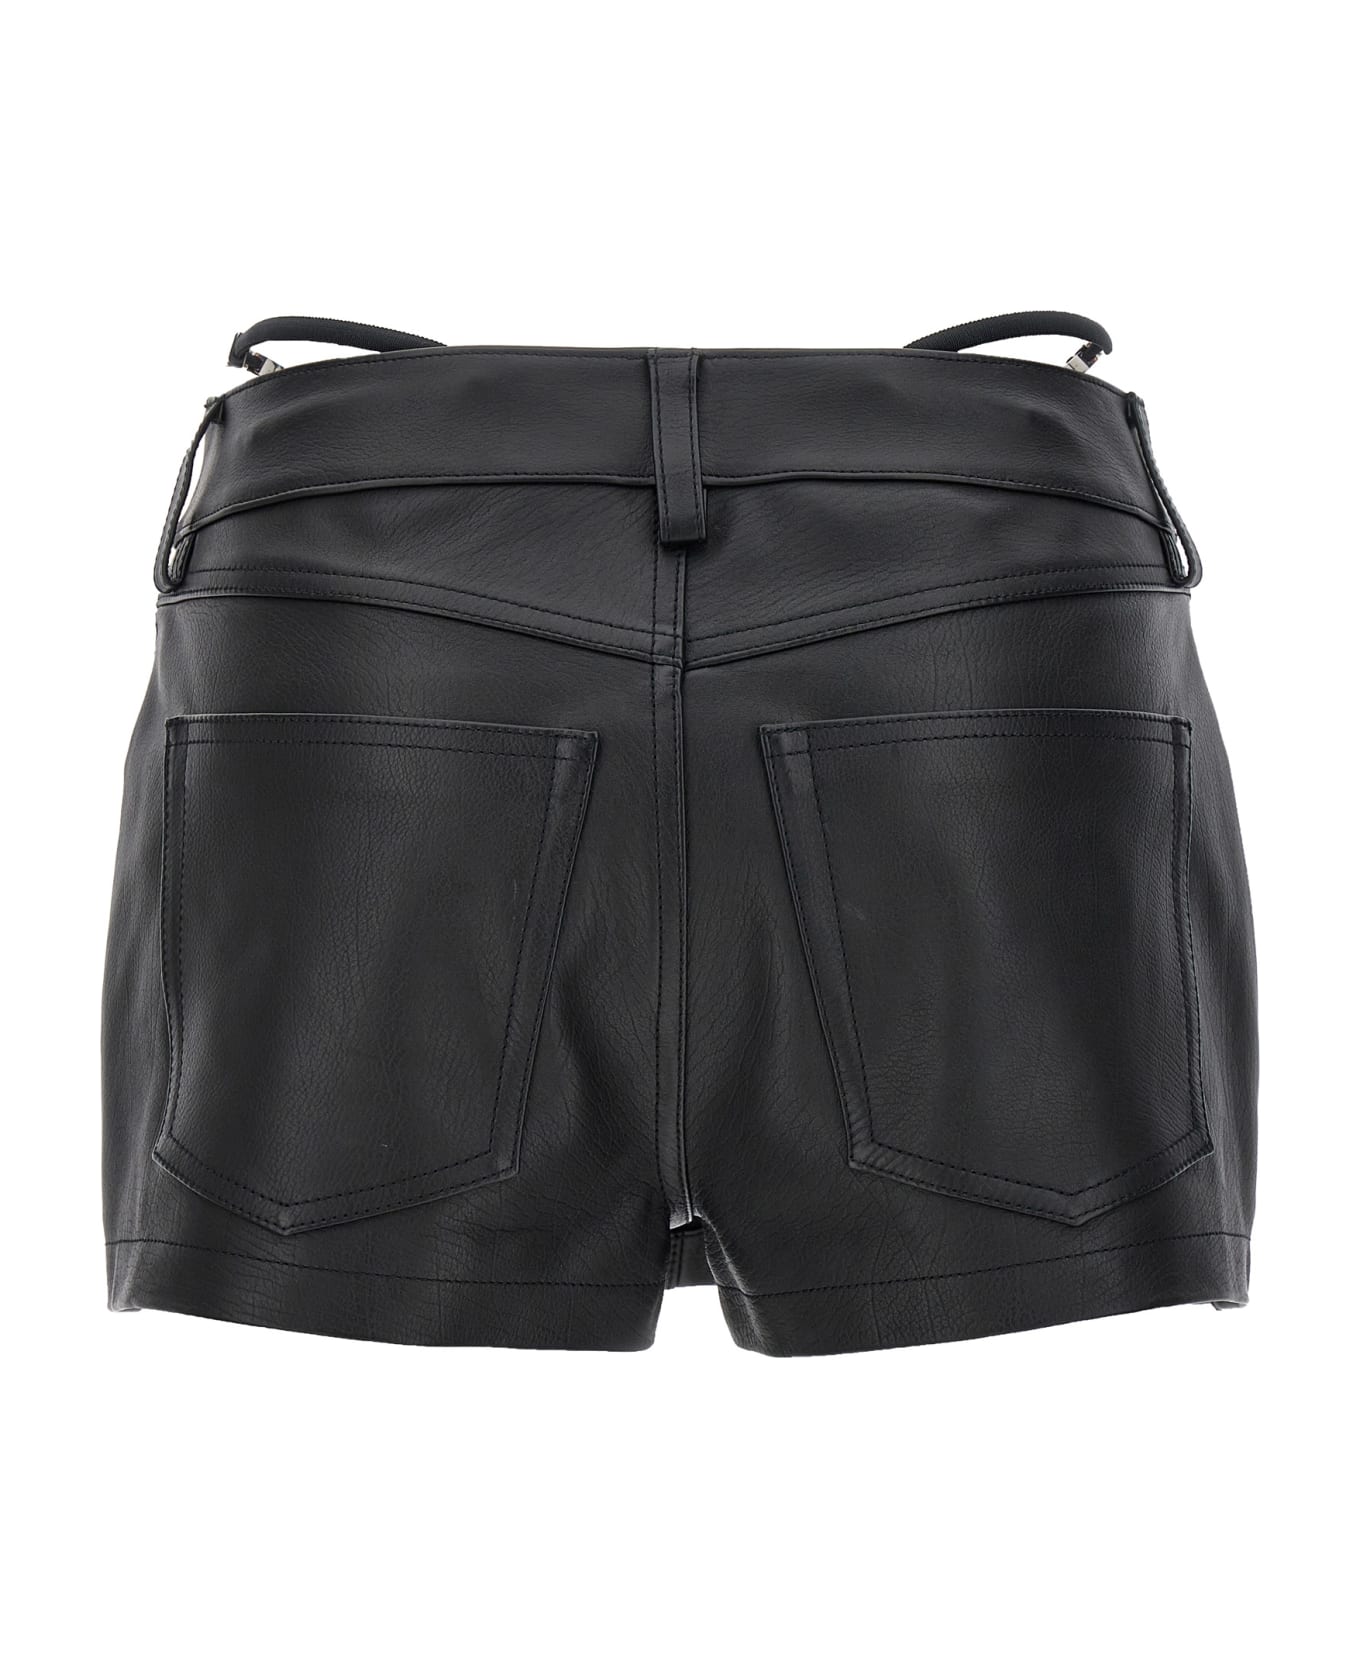 Alexander Wang Thong Leather Skort - Black  